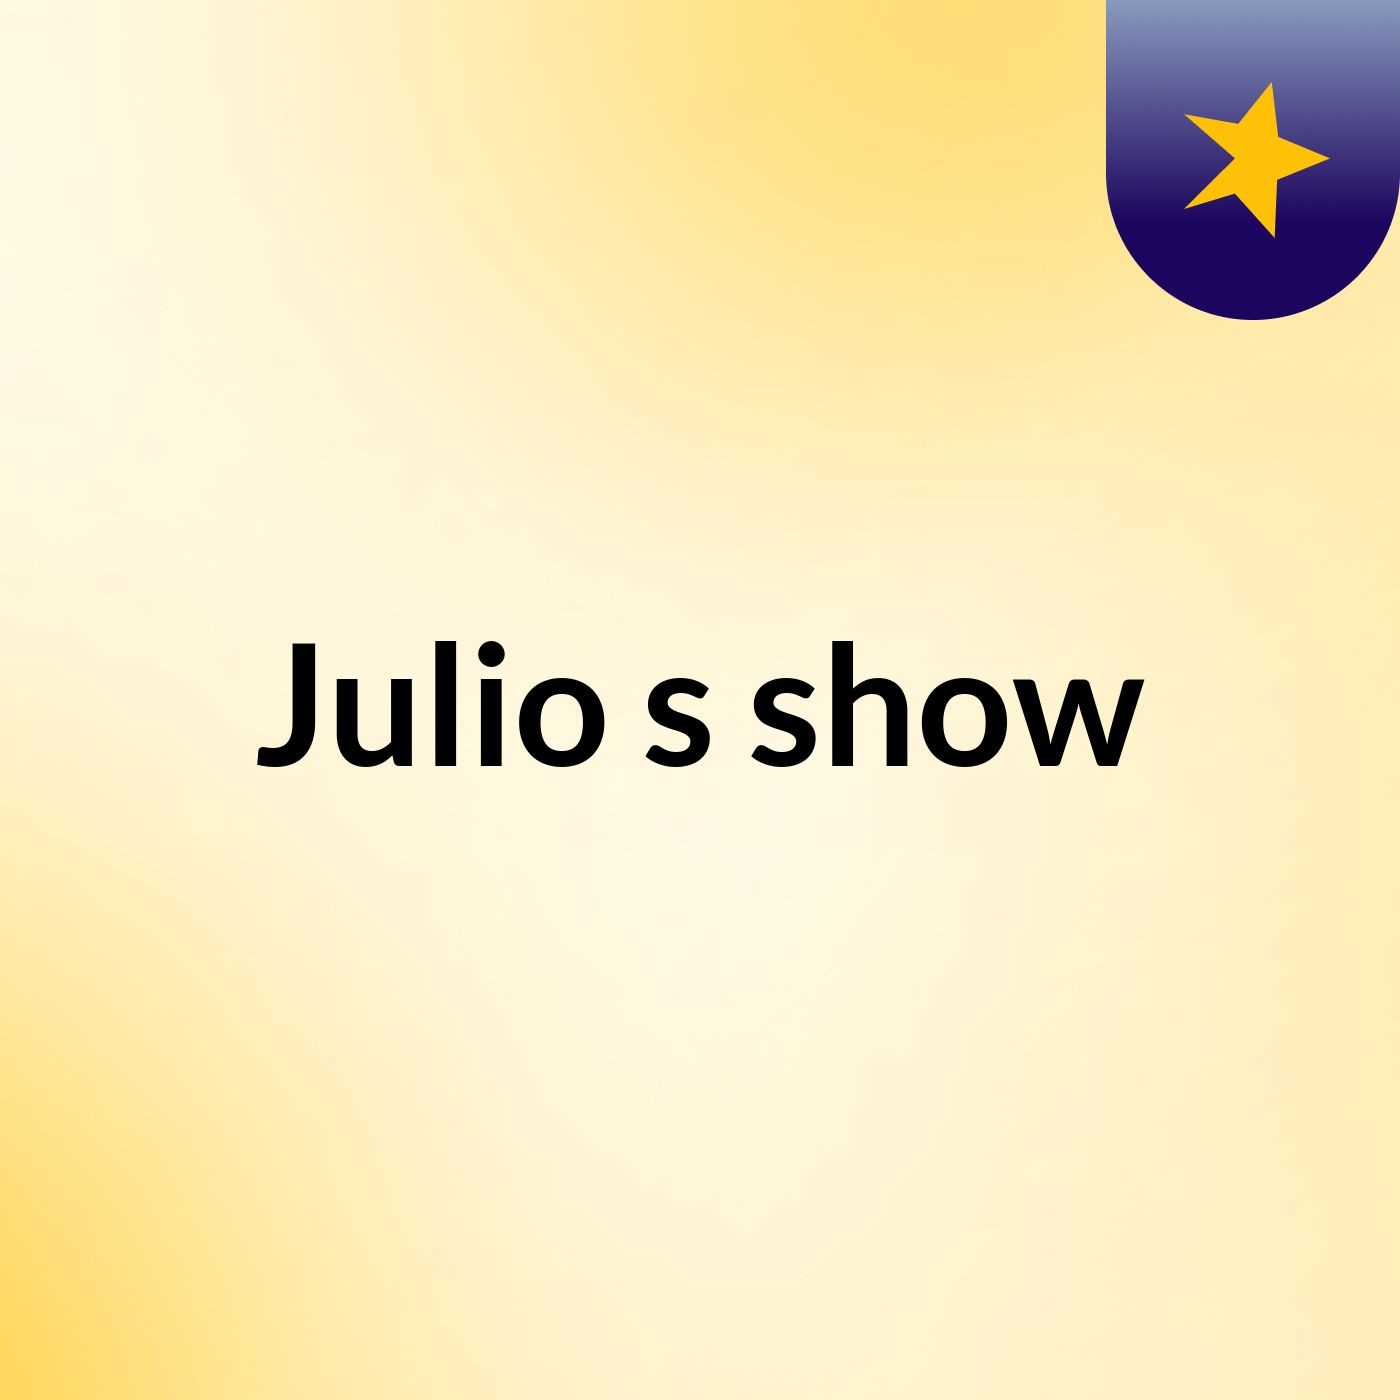 Julio's show